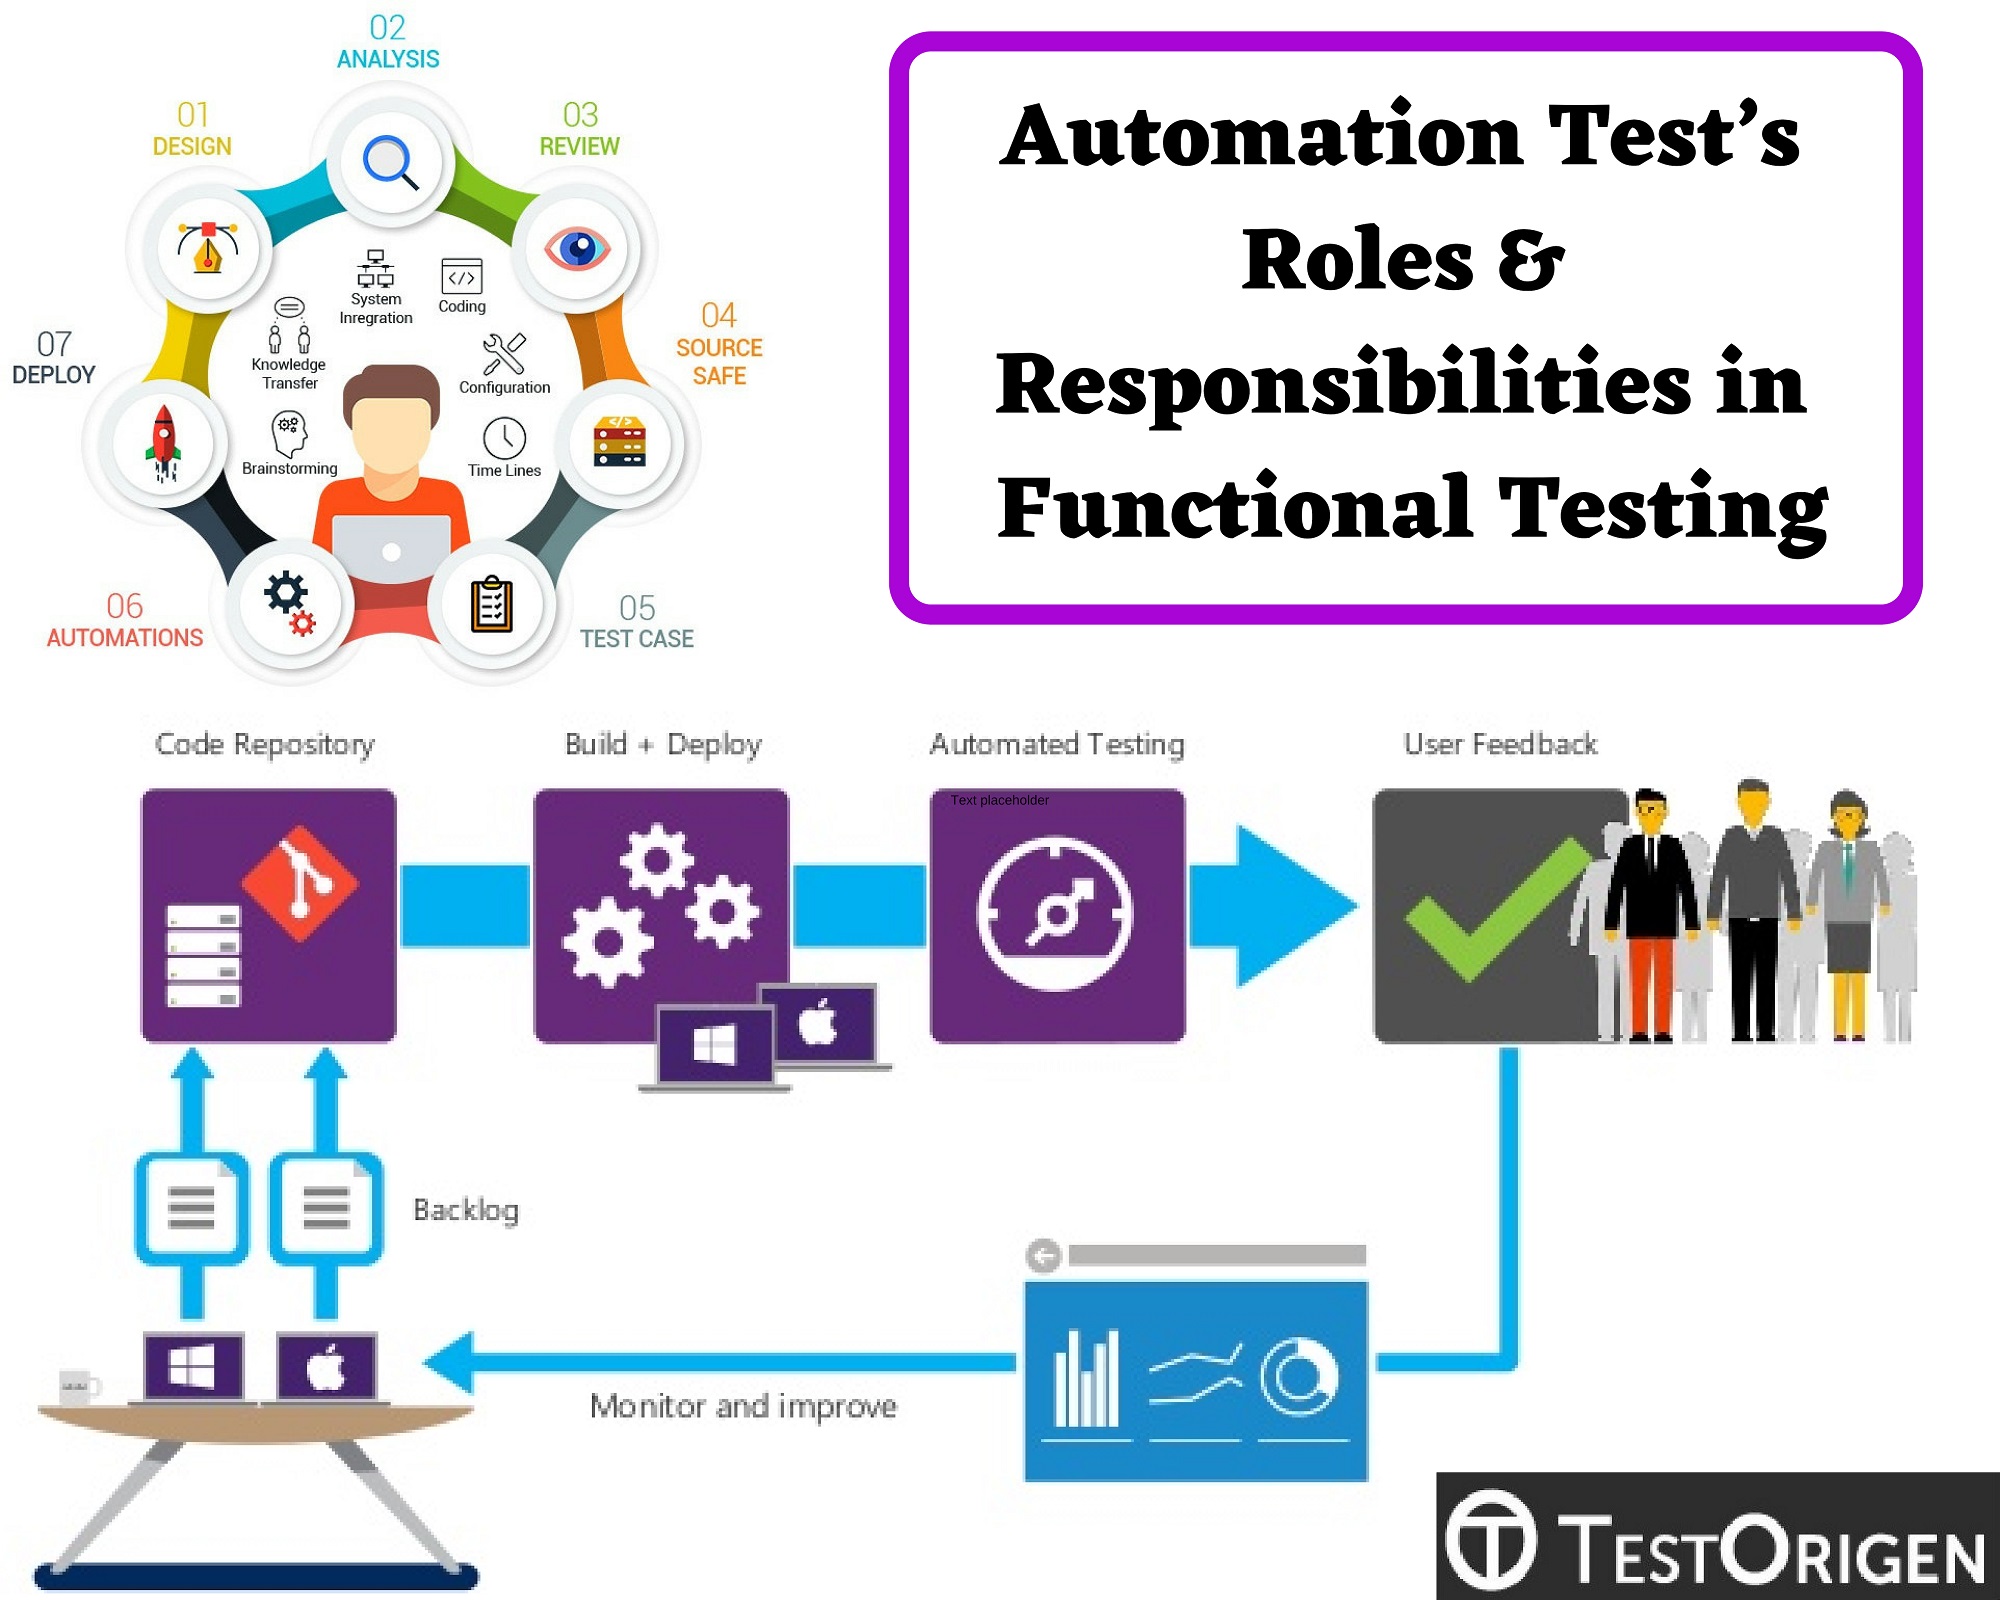 Web App Testing Best Practices Explained - TestOrigen